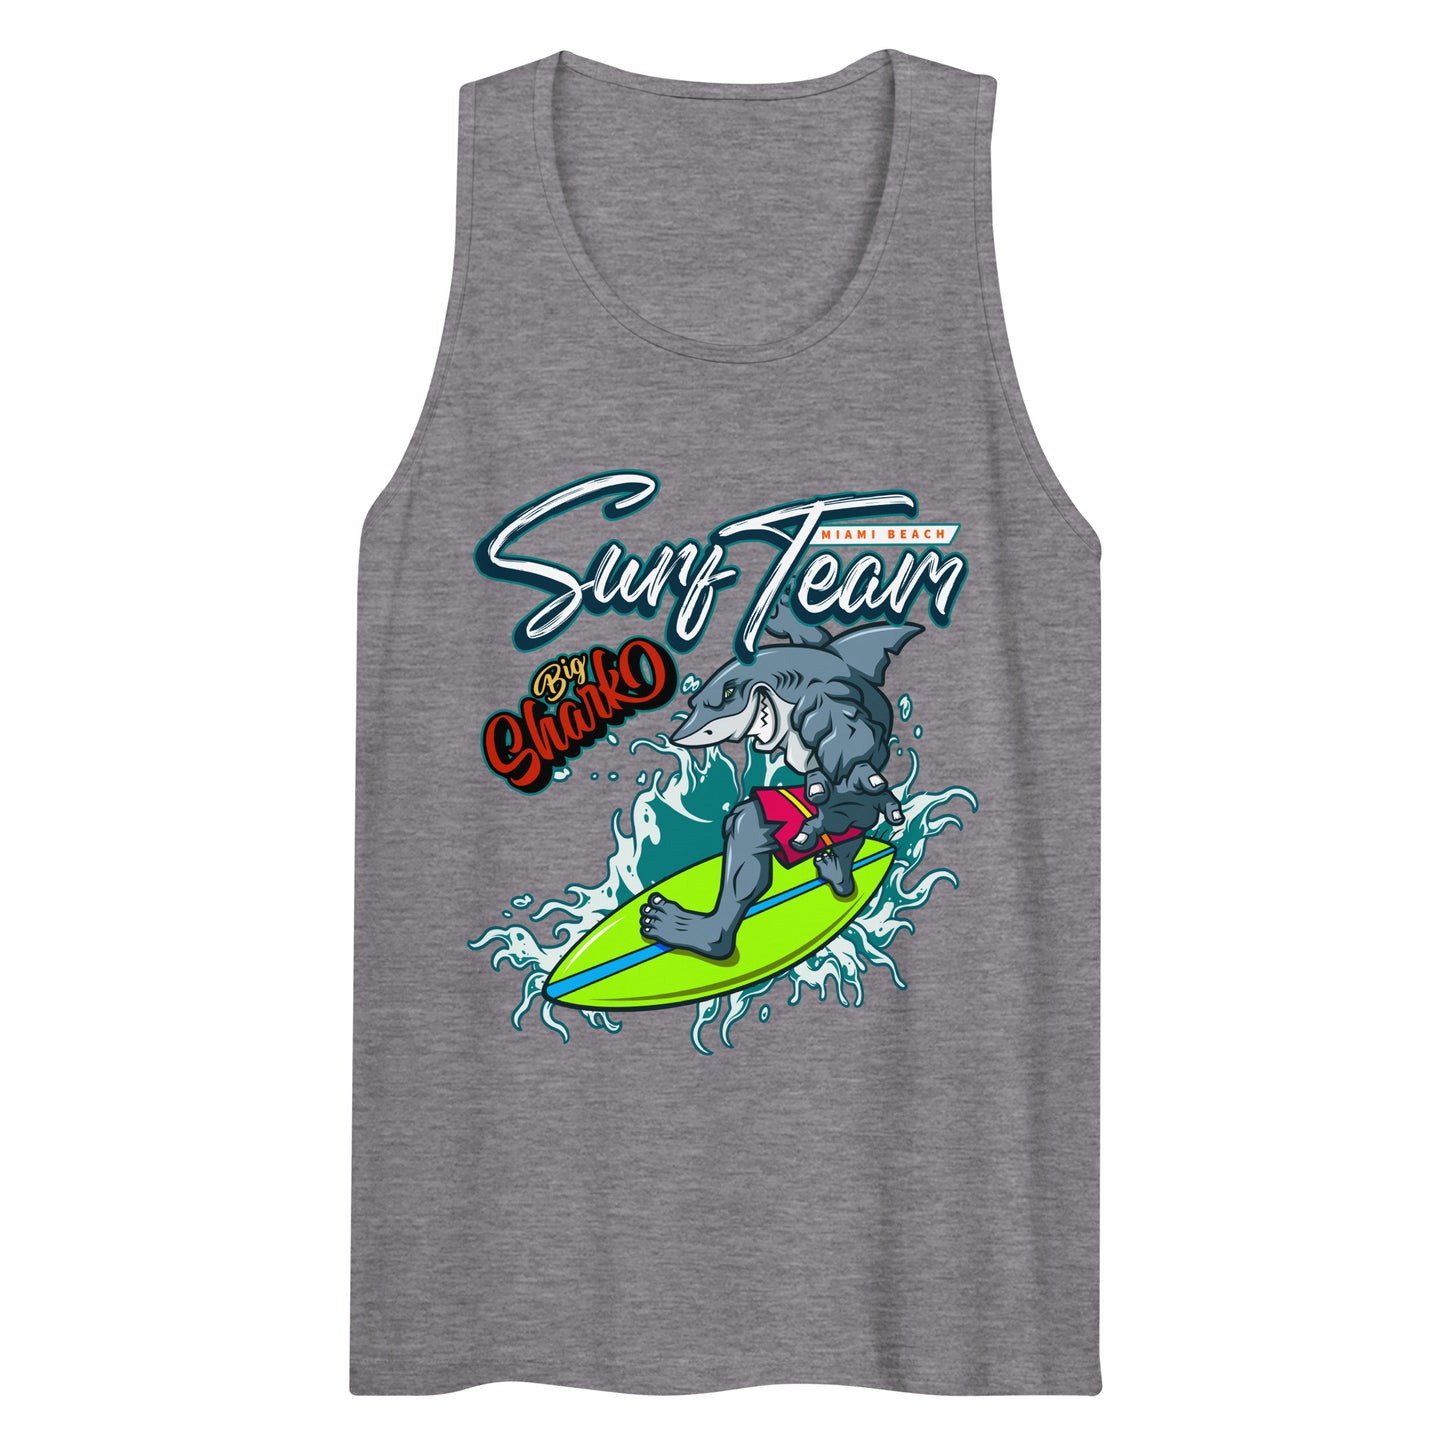 Surf Team Shark Tank Top